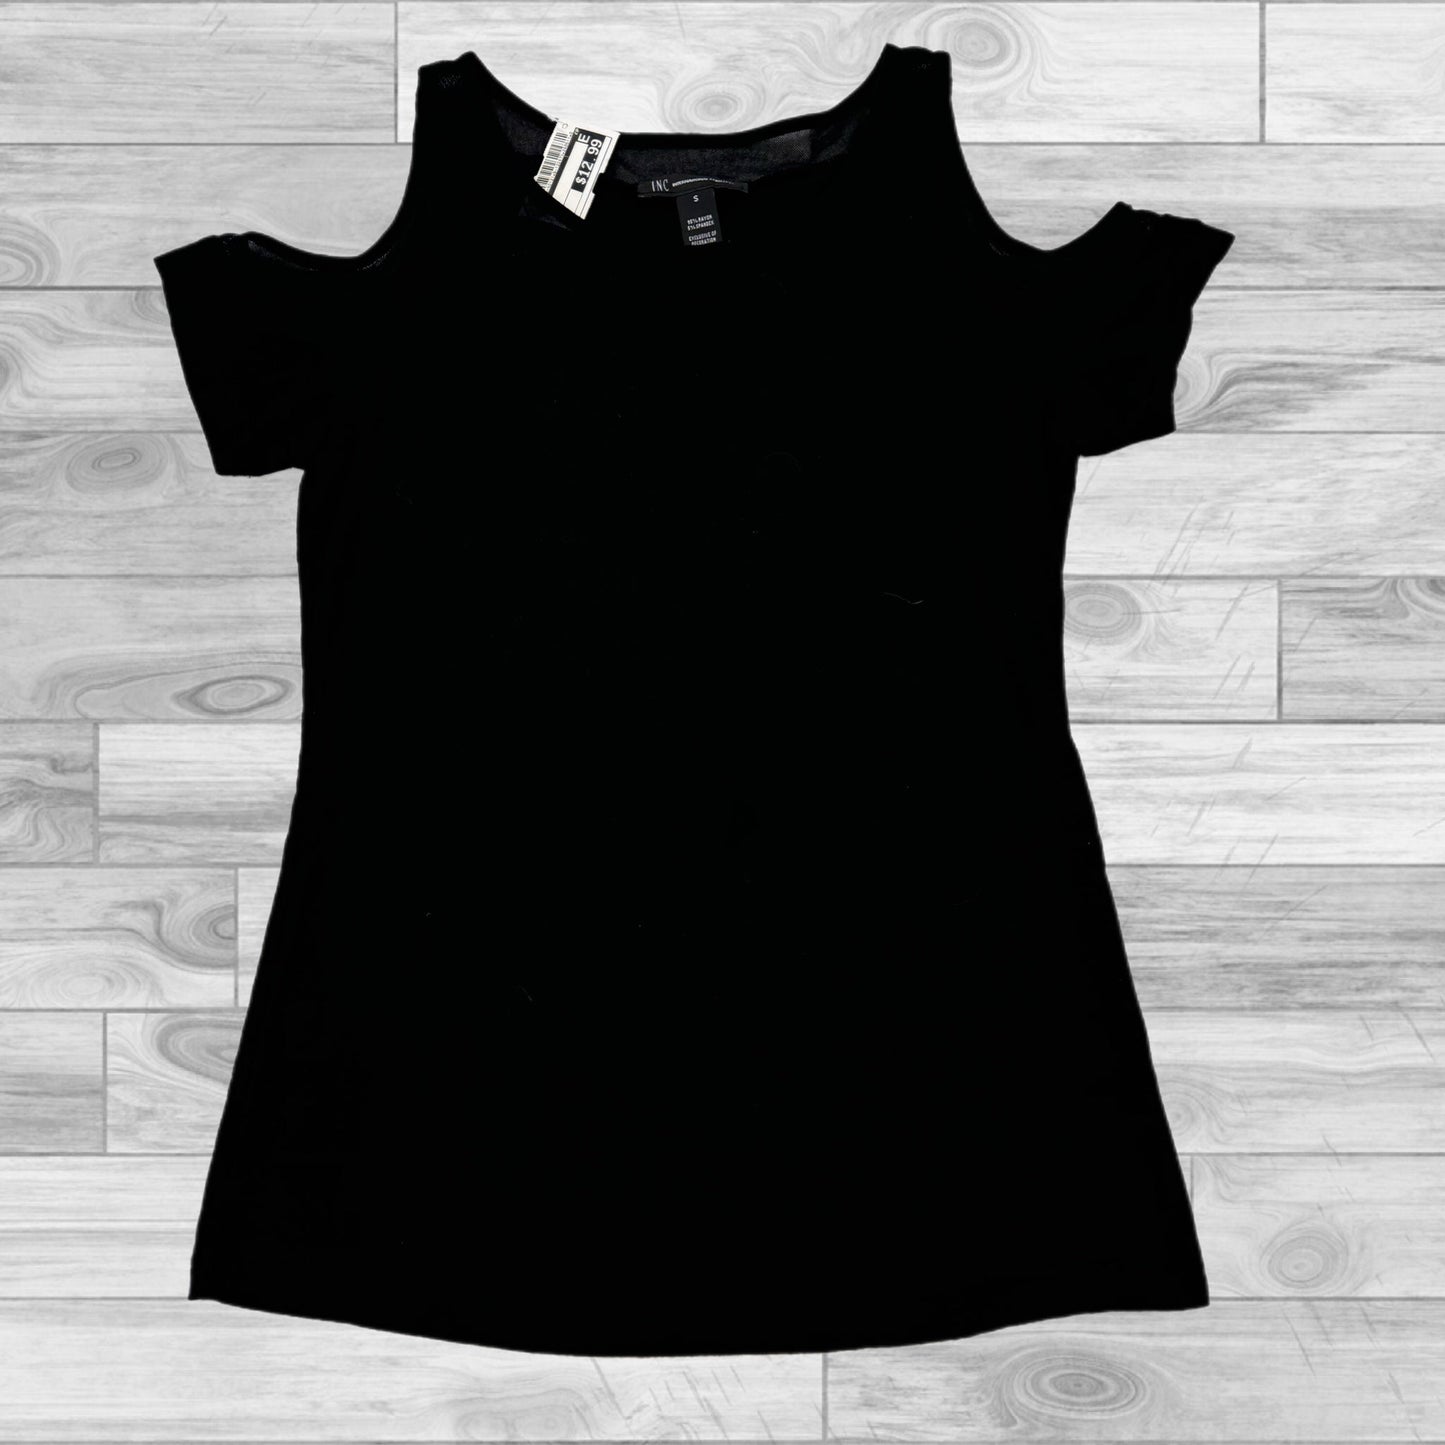 Black Top Short Sleeve Inc, Size S